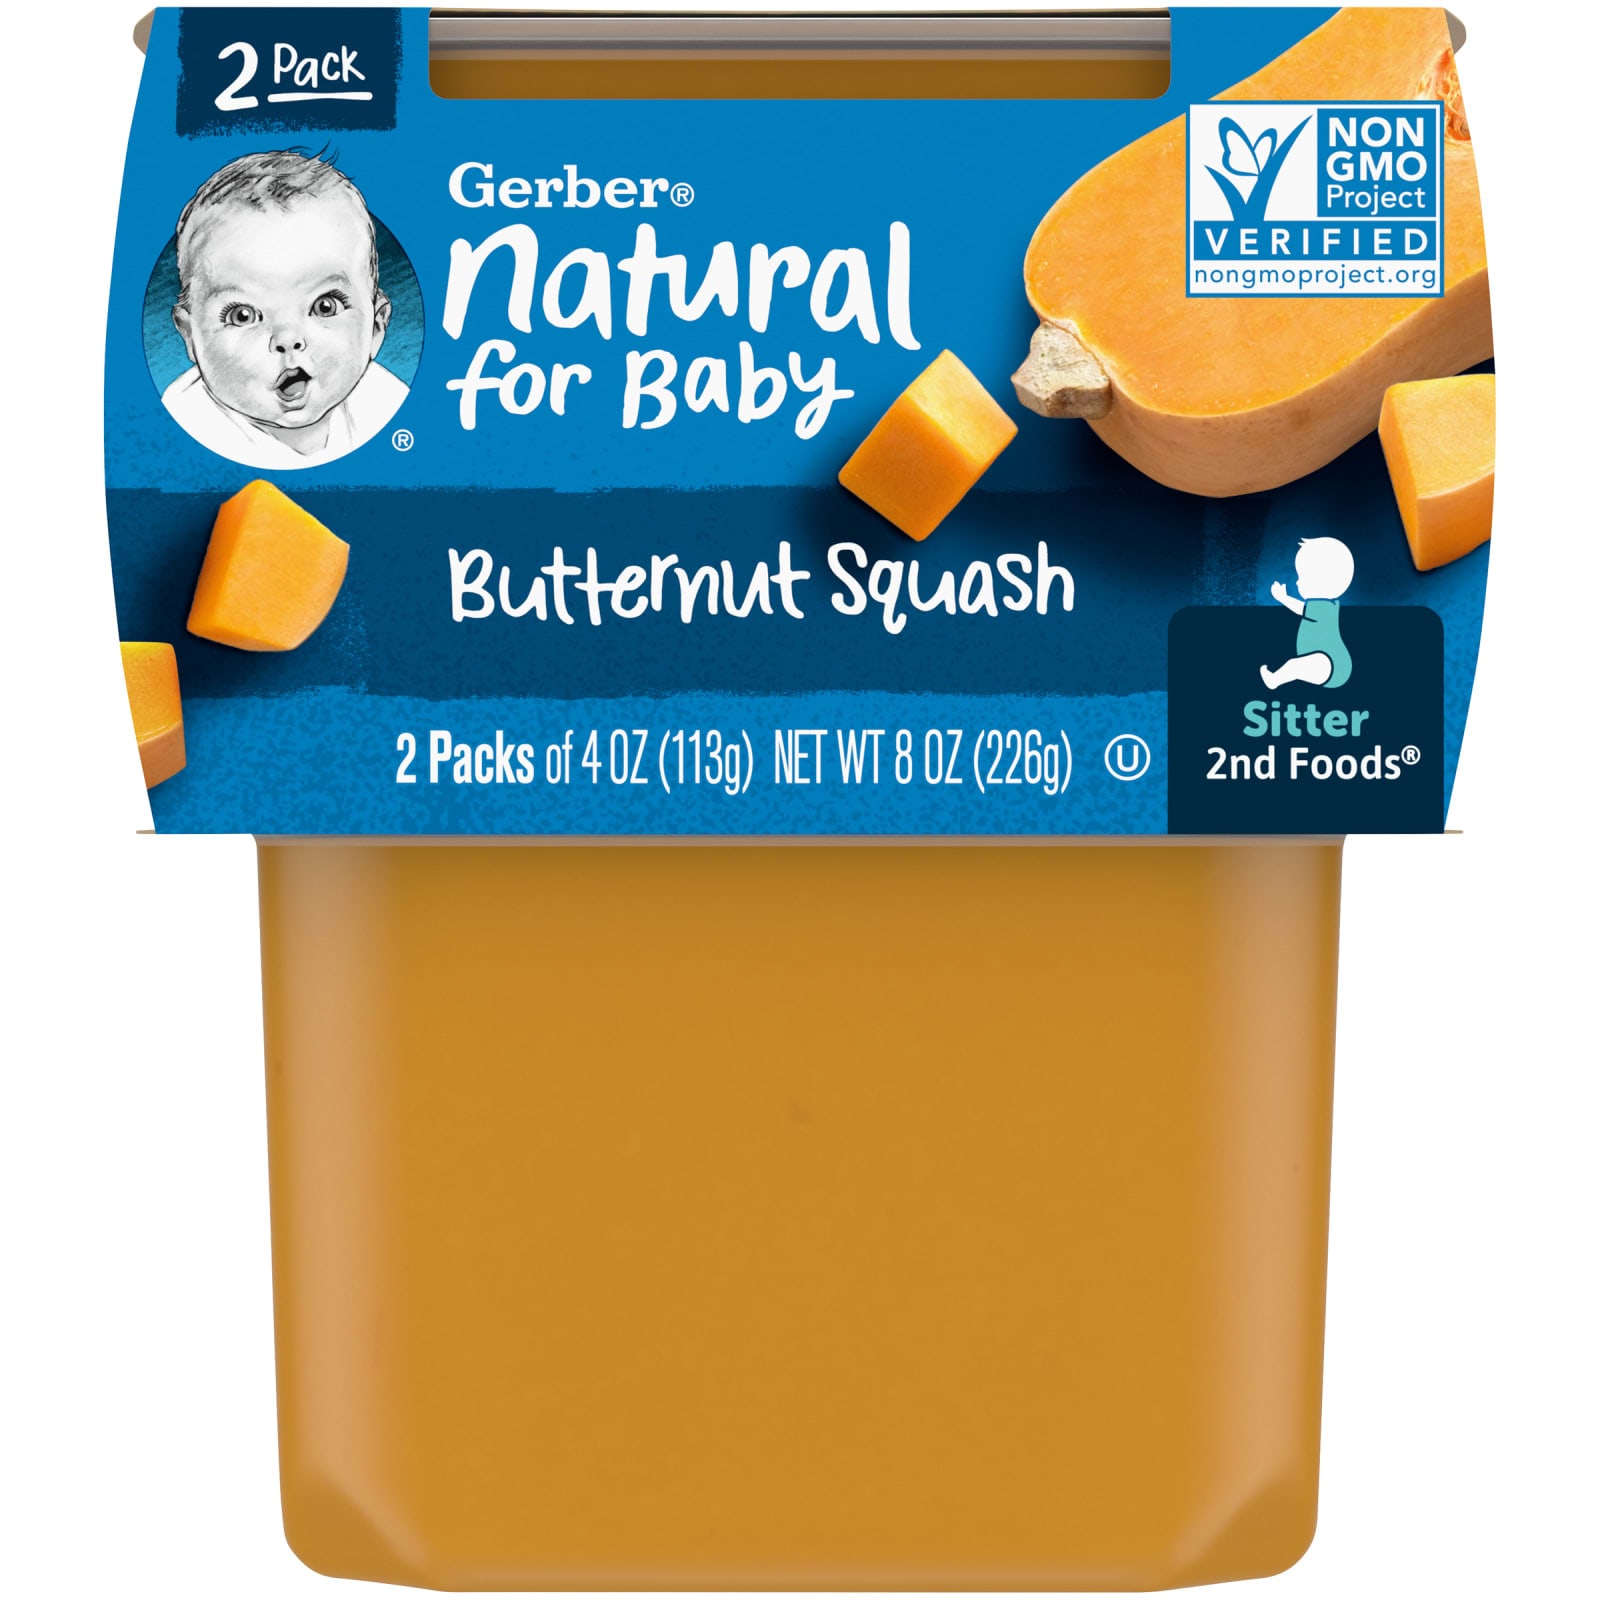 Gerber Natural For Baby 2nd Foods Butternut Squash 2 Packs 4 Oz